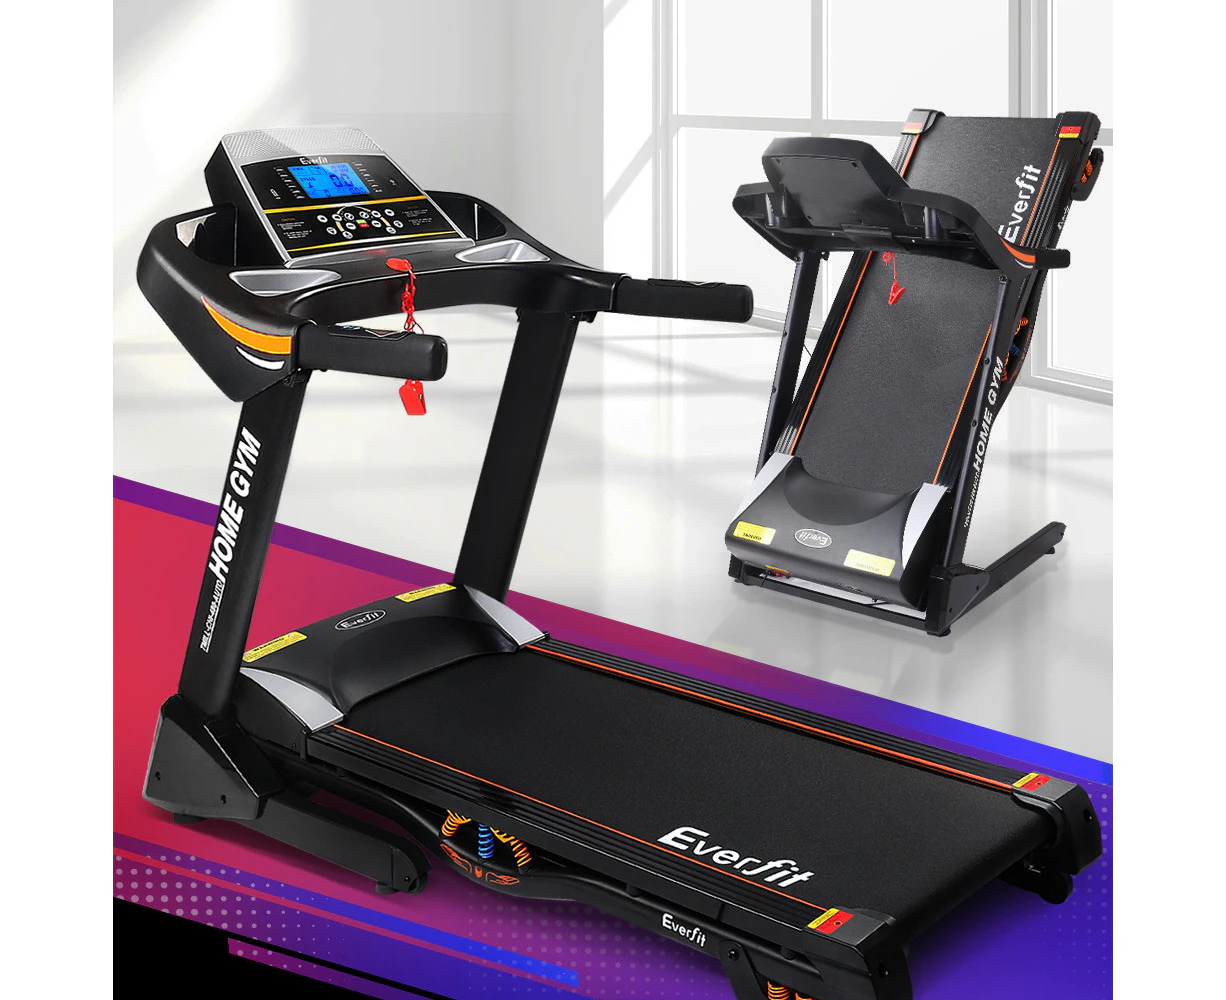 LSG CHASER 2 Treadmill 14km/h 430mm Belt Width Foldable Running Jogging  Exercise Machine Home Gym Fitness Equipment